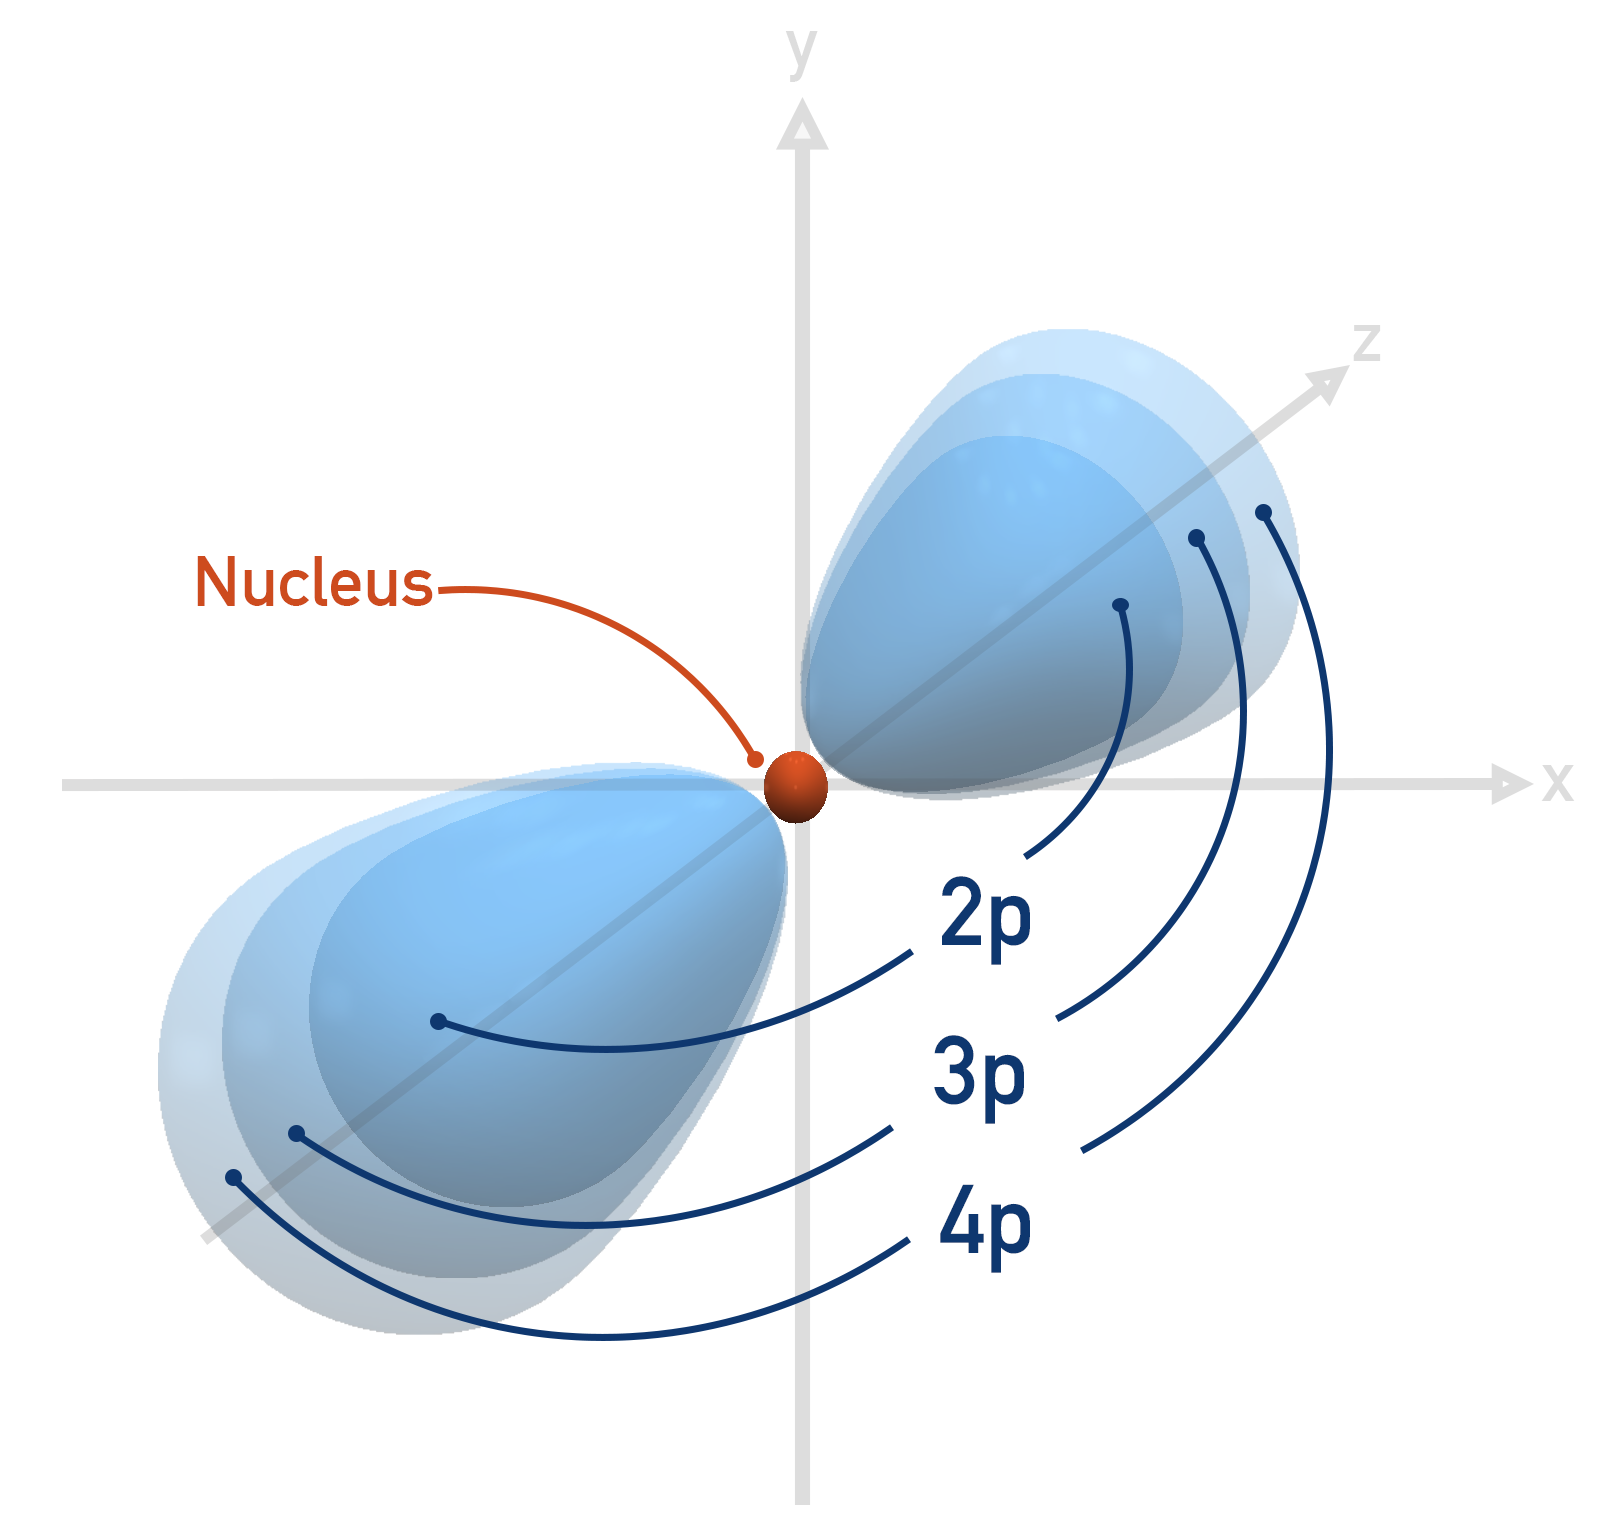 2p, 3p and 4p electron orbitals around a nucleus